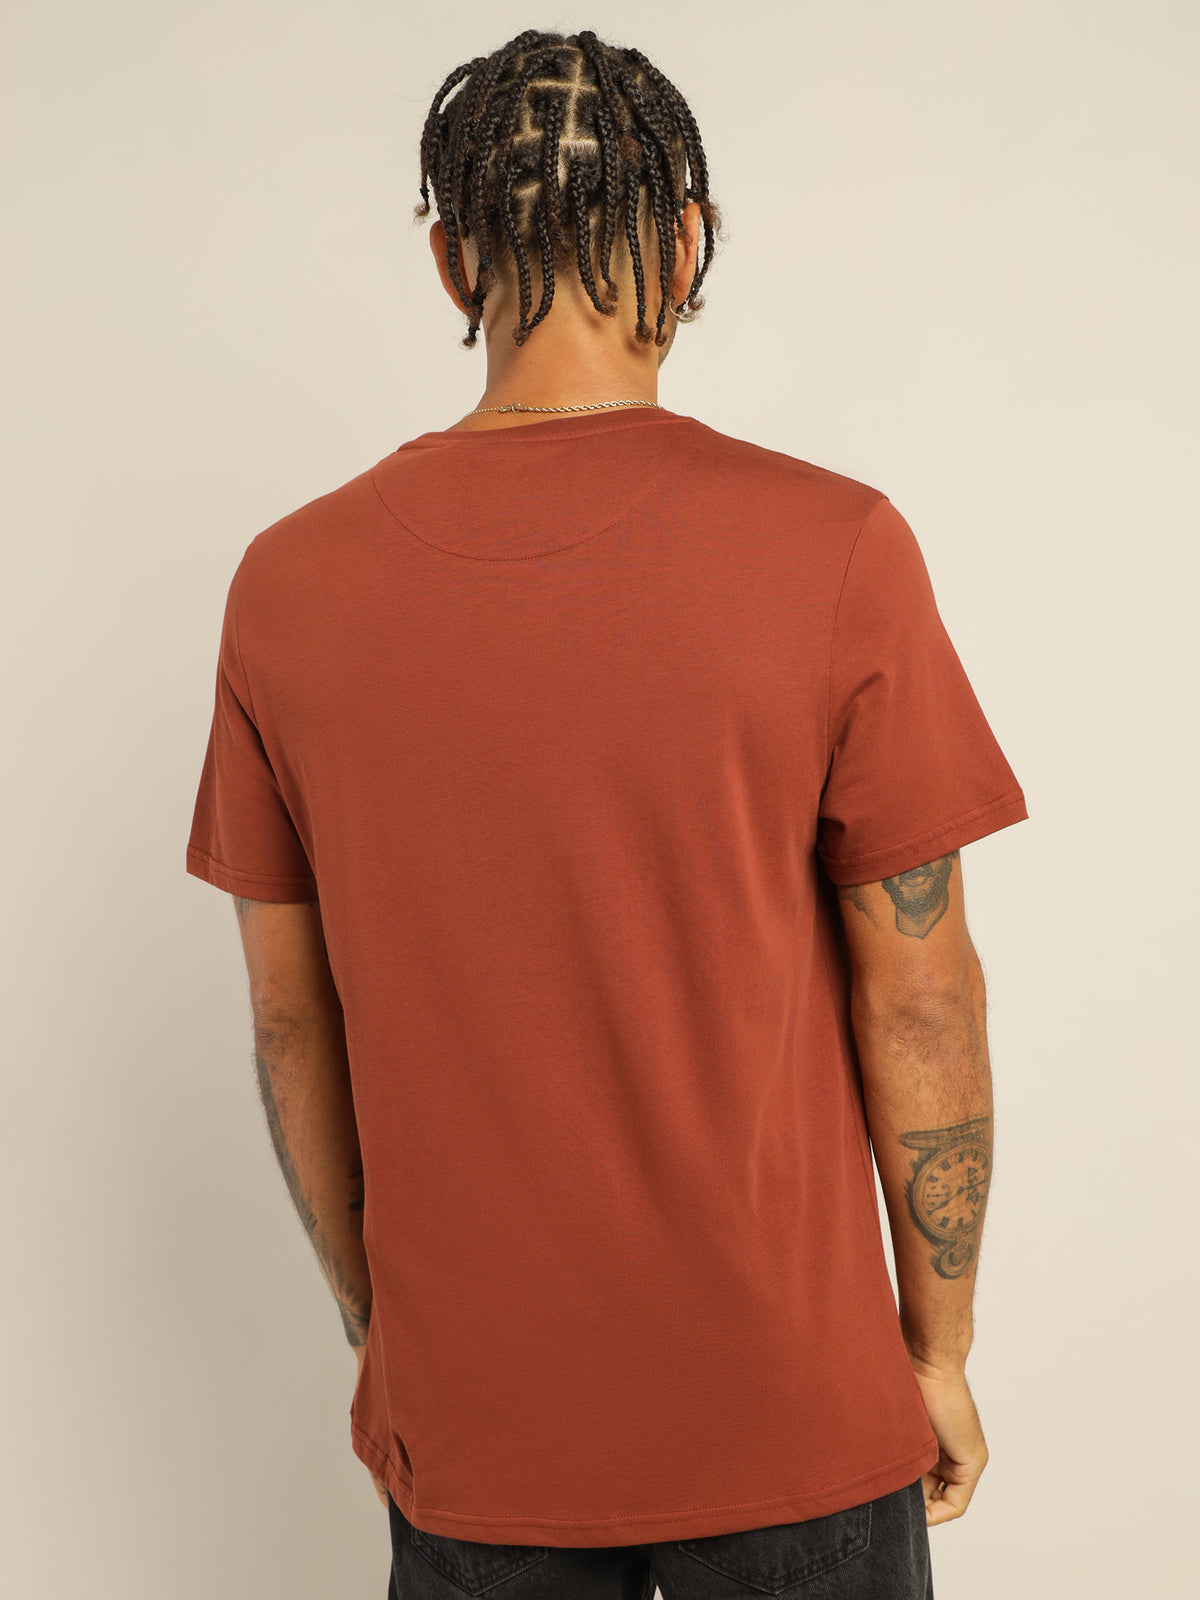 Plain T-Shirt in Rust Orange